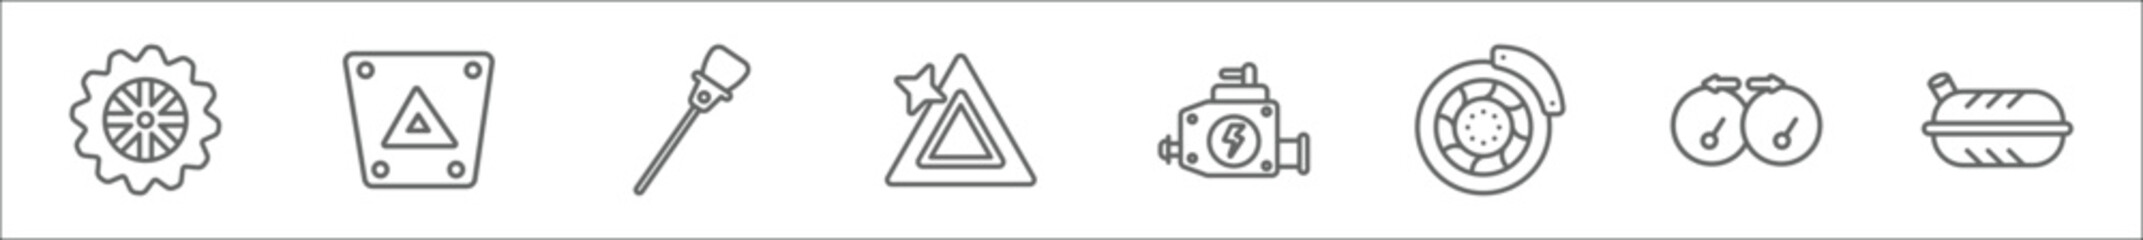 outline set of car parts line icons. linear vector icons such as car sprocket, car hazard lights, dipstick, parking light, carburettor, disc brake, indicator, petrol tank